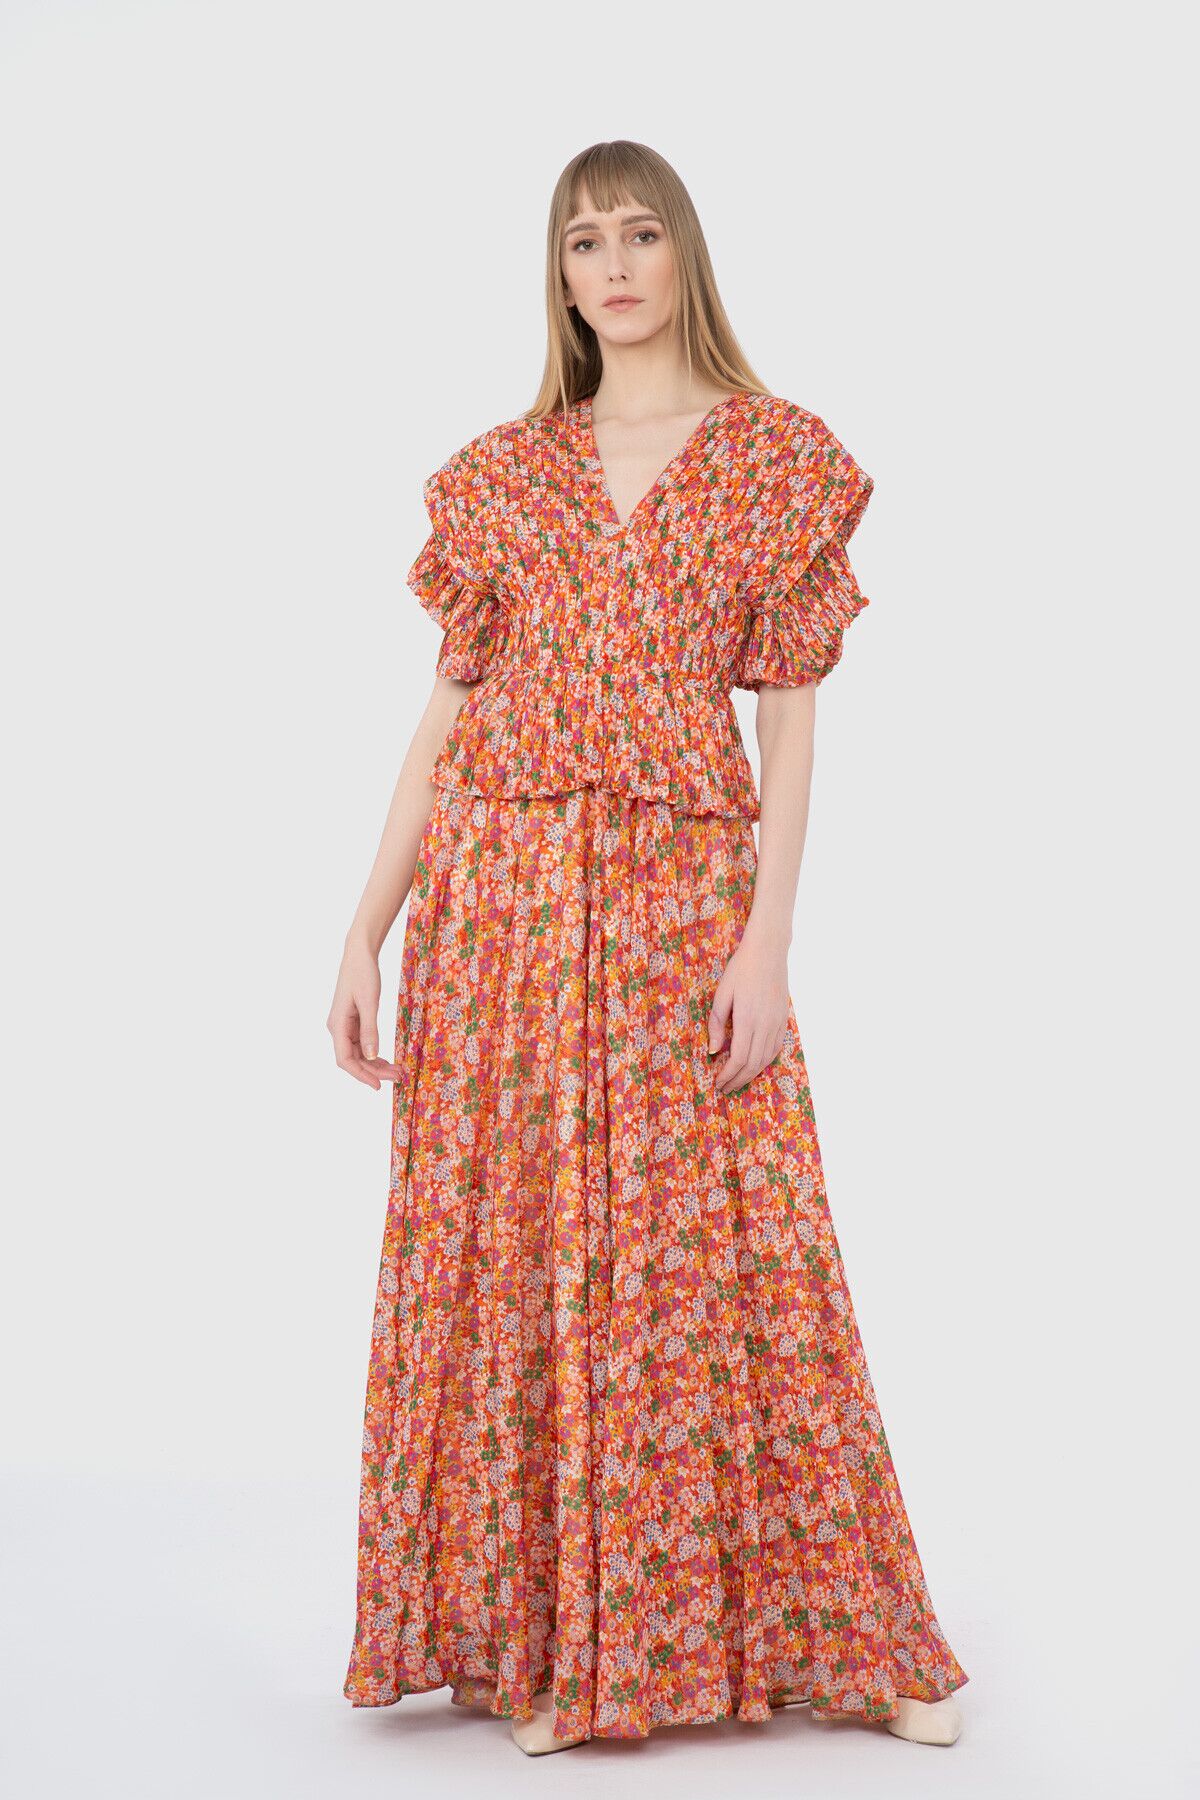 GIZIA - Crispy Floral Patterned Pleated Detailed Long Orange Dress